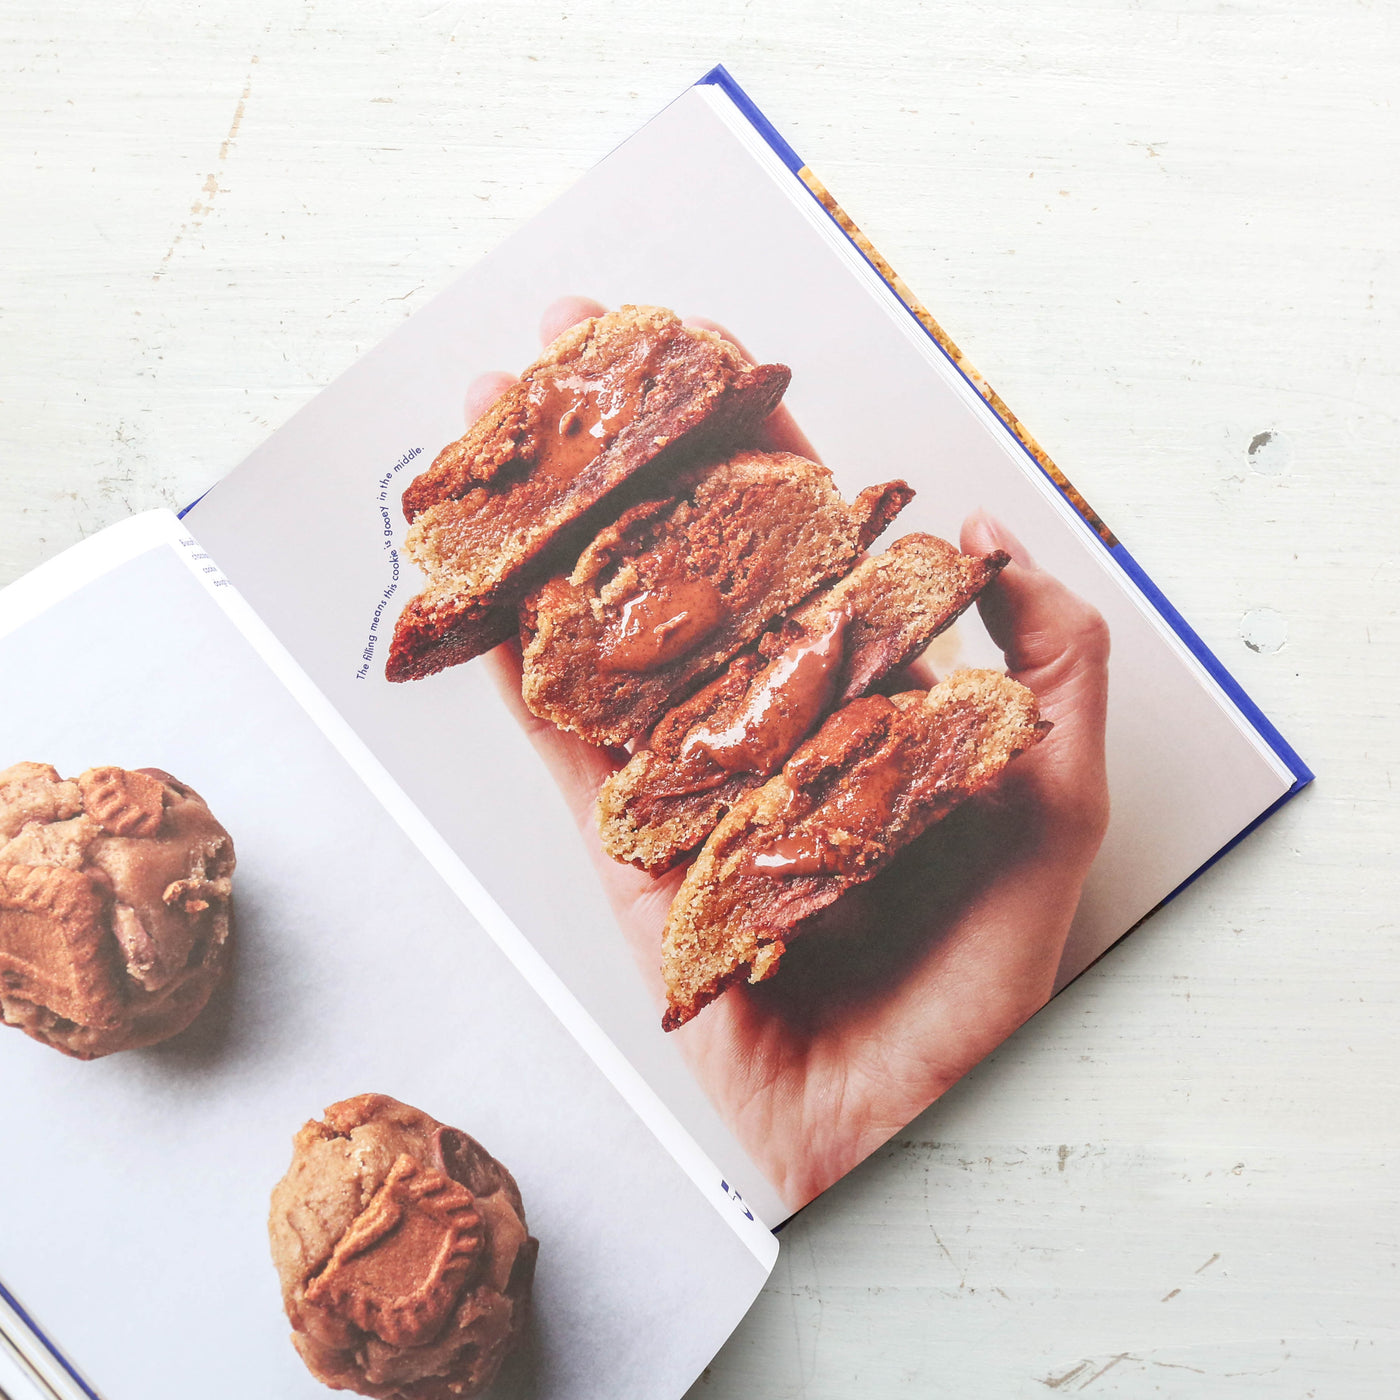 Cookies & Crumbs : Chunky, Chewy, Gooey Cookies for Every Mood